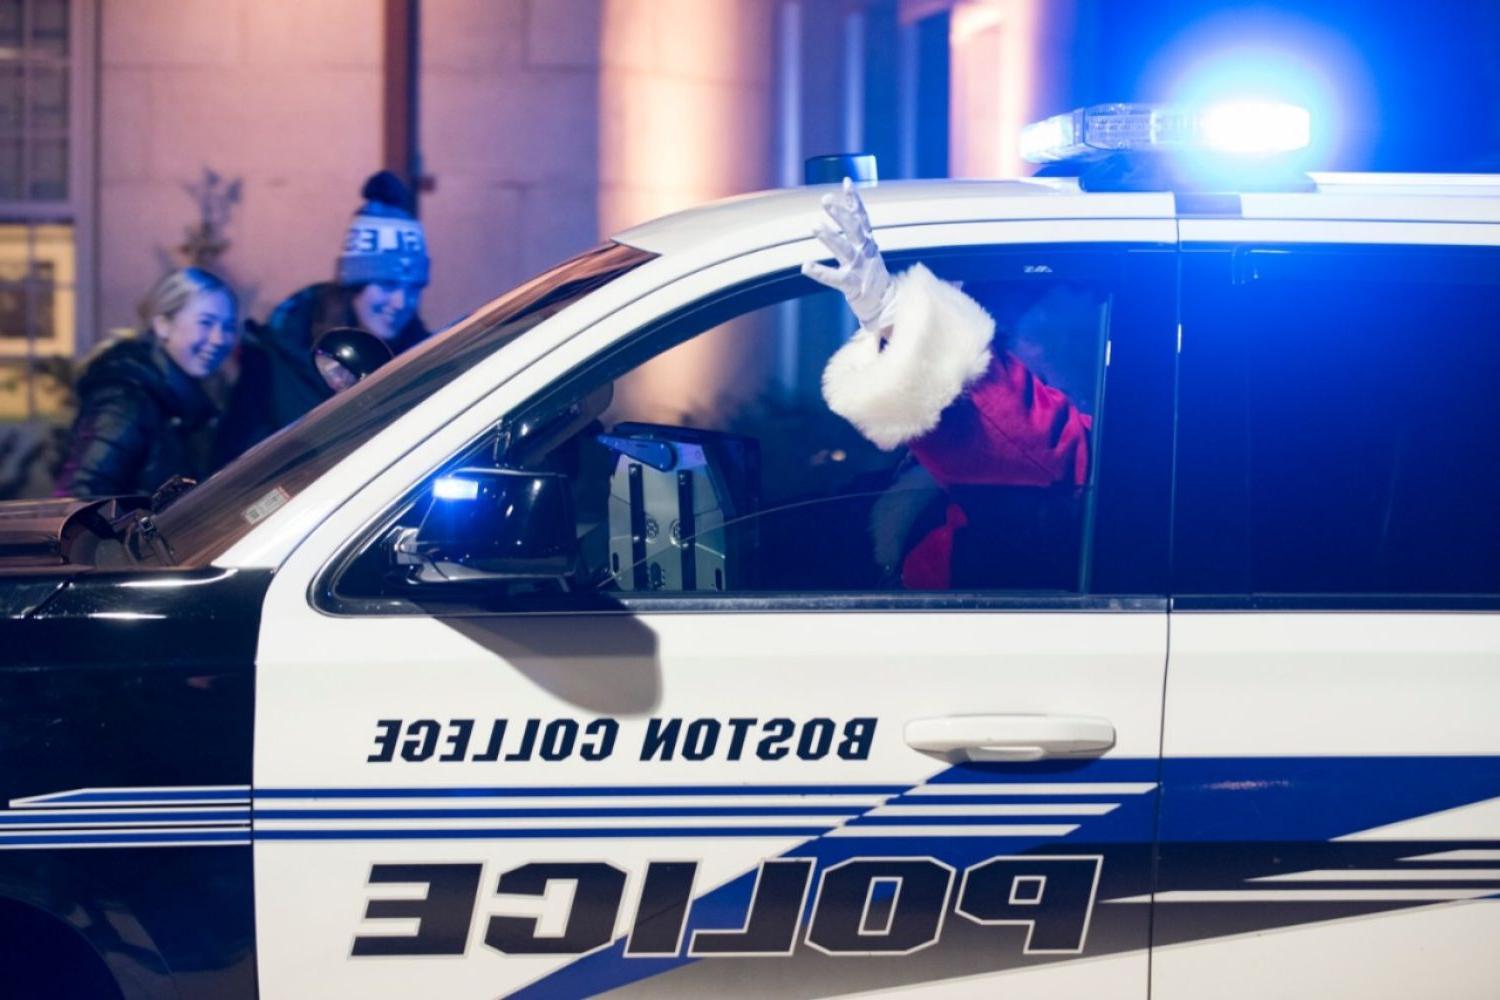 A BC Police escort for Santa Claus